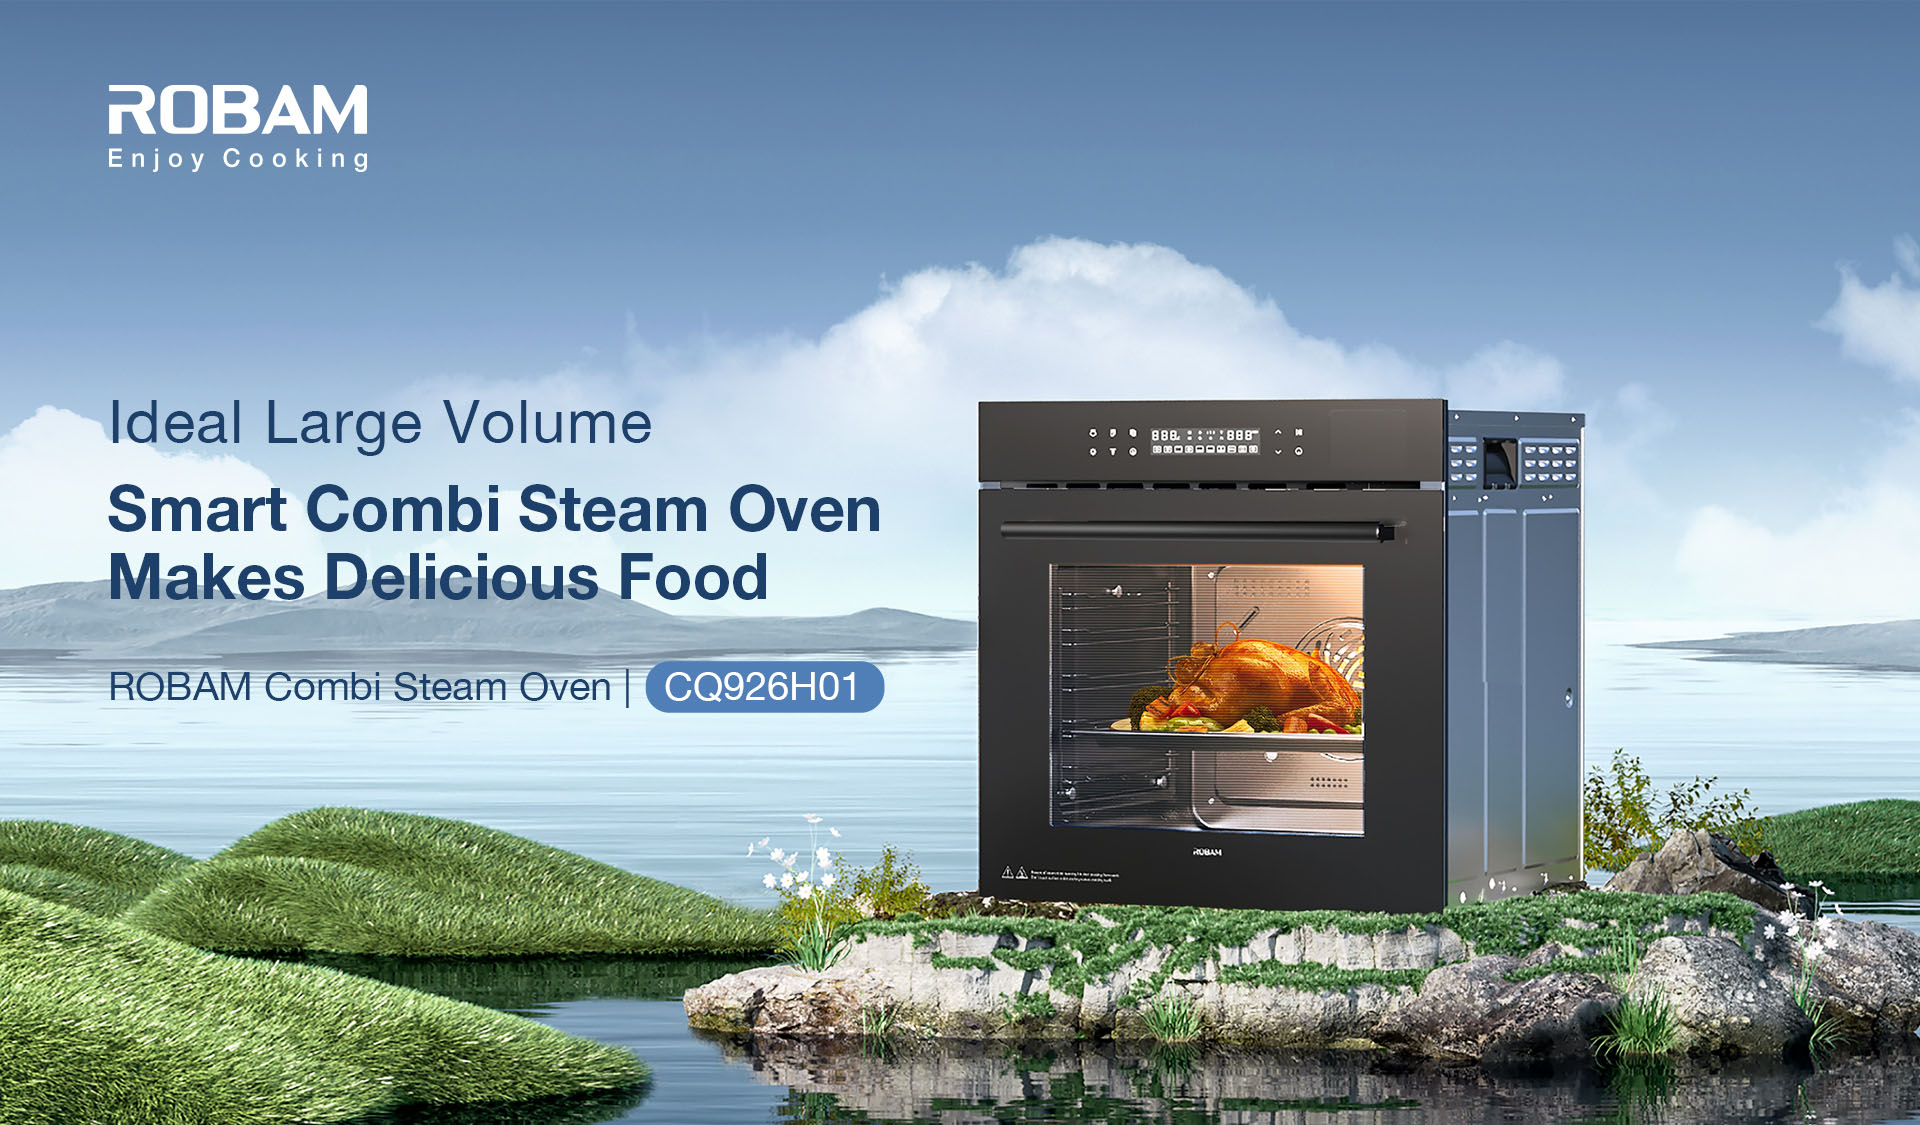 ROBAM Combi Steam Oven CQ926